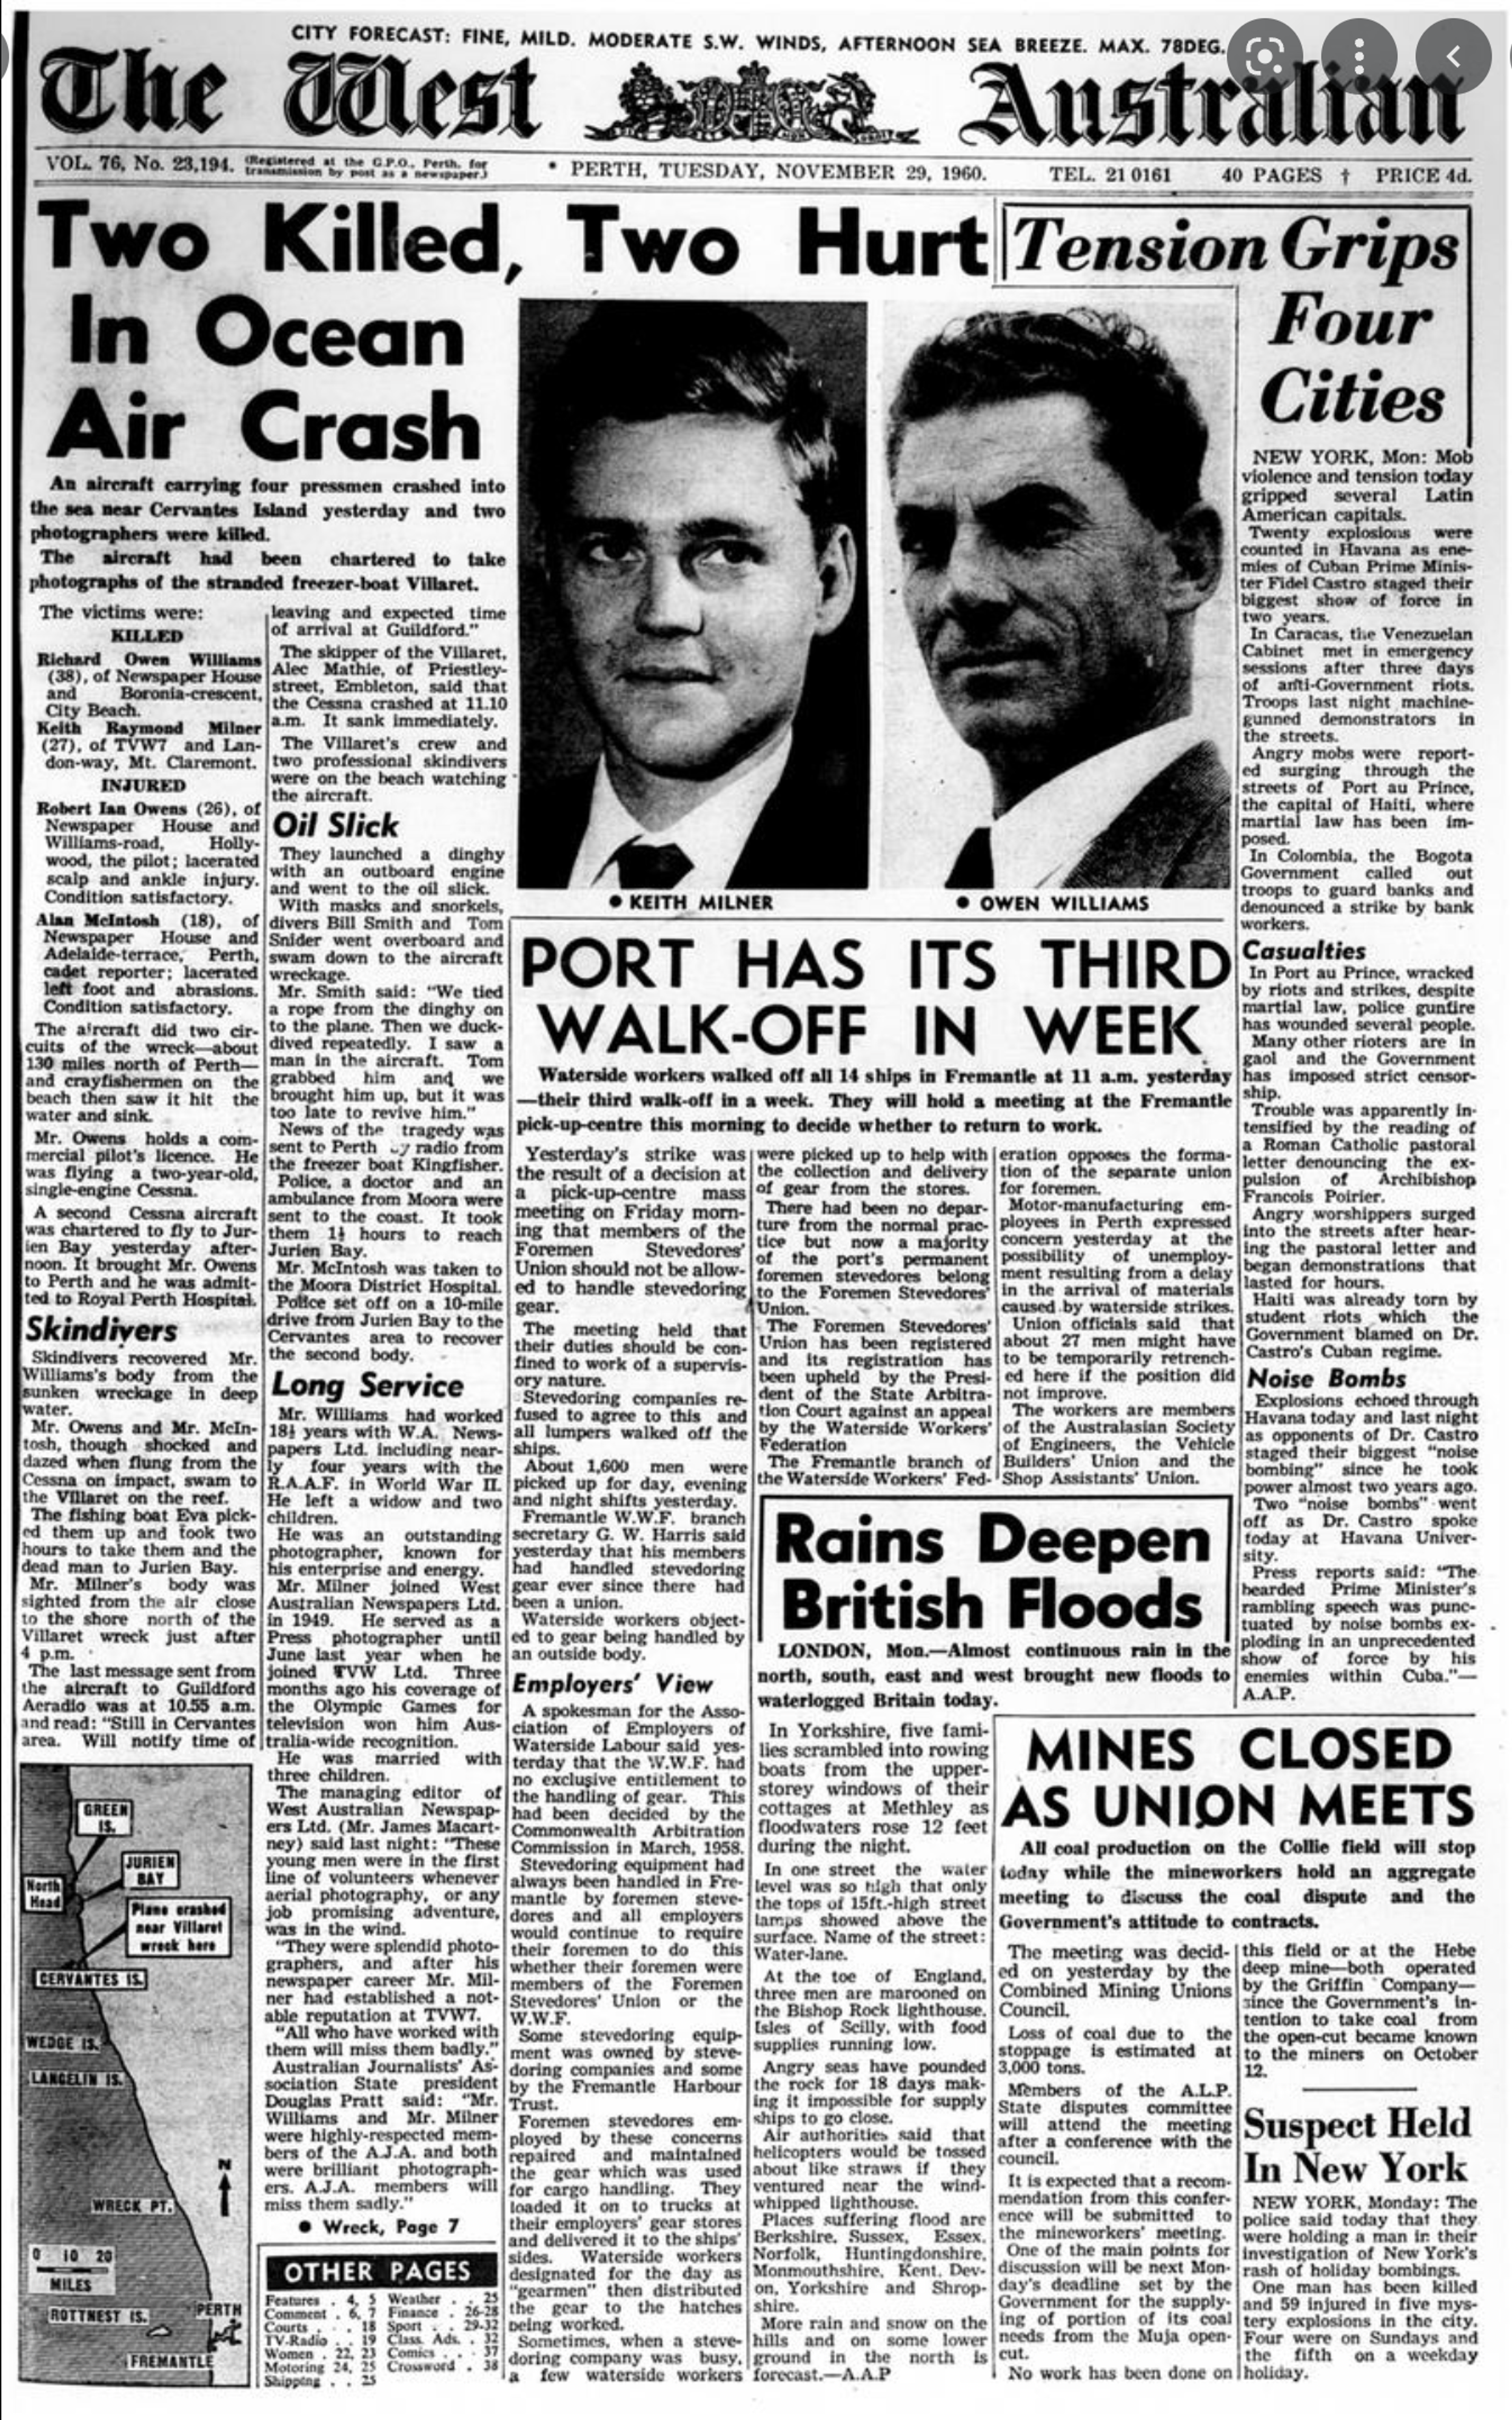 The West Australian, Tuesday November 29, 1960